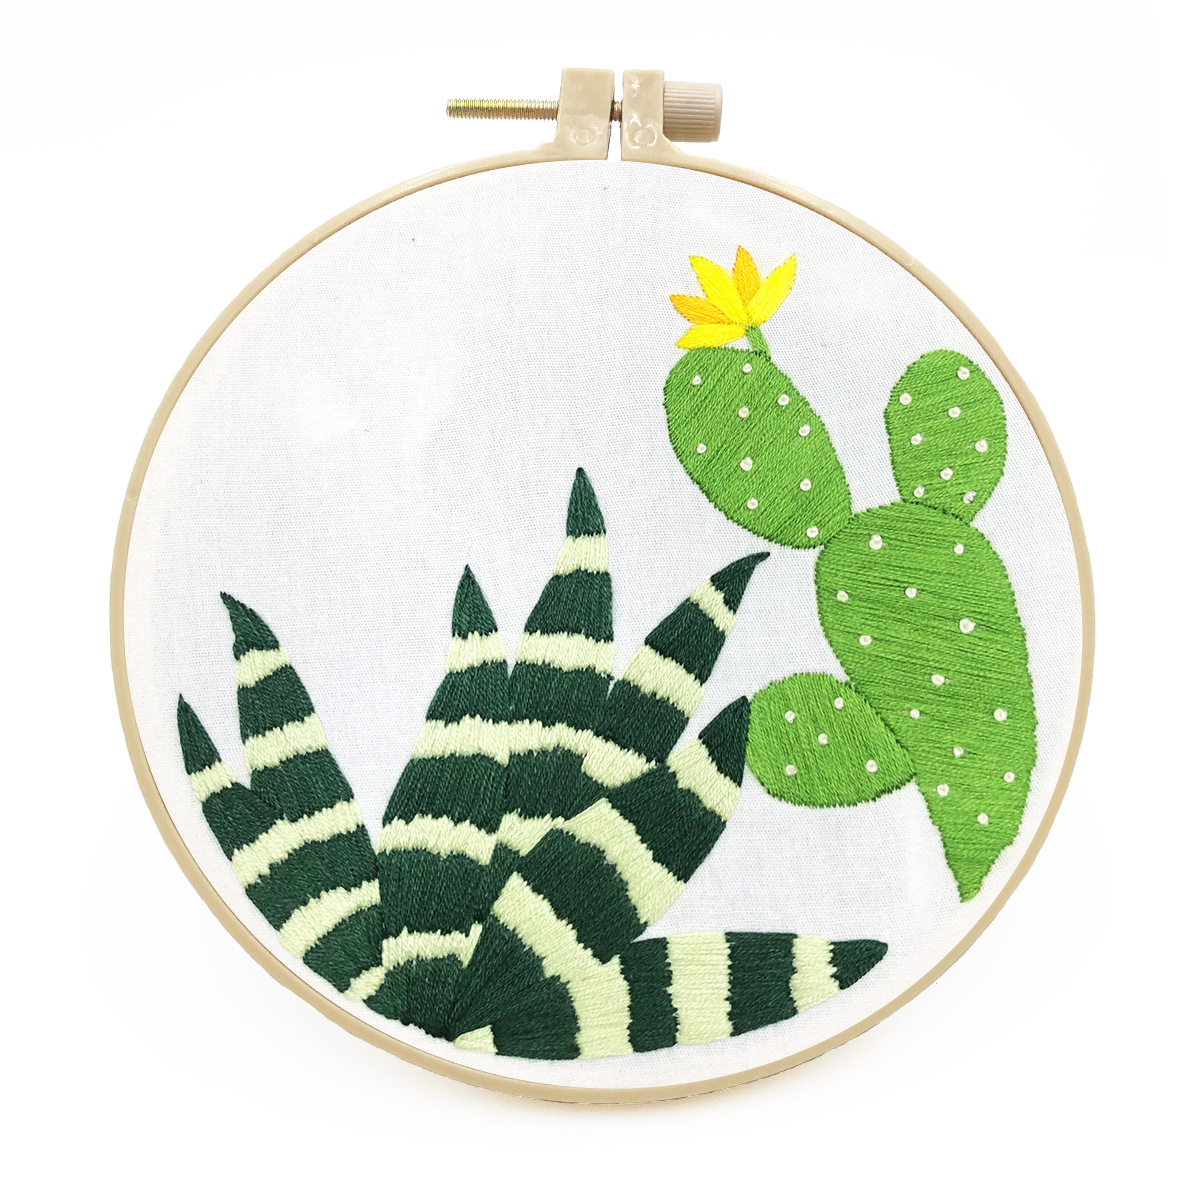 DIY Handmade Embroidery Cross stitch kit - Lovely Cactus Pattern